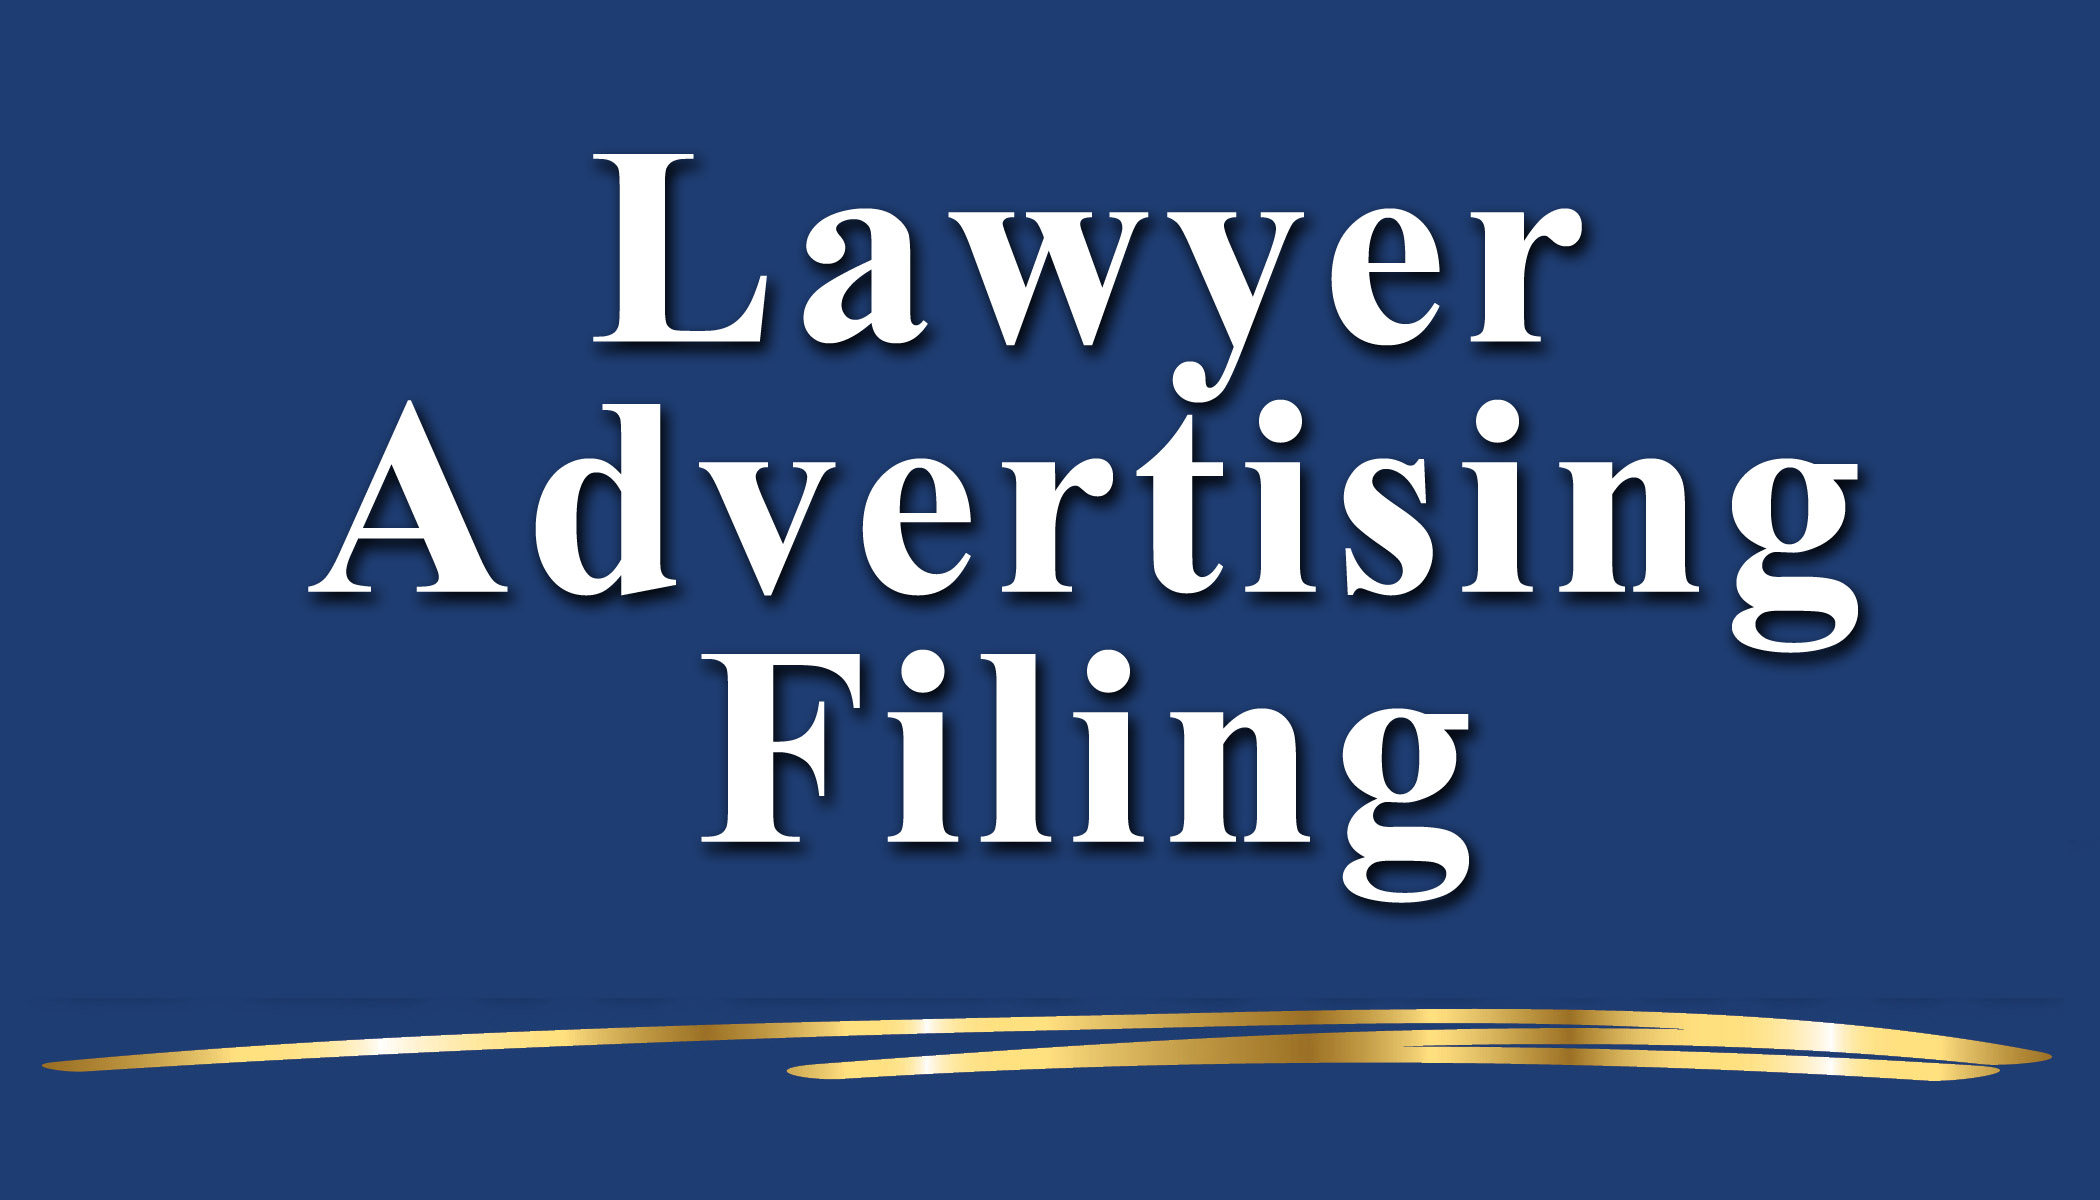 Lawyer Advertising Filing